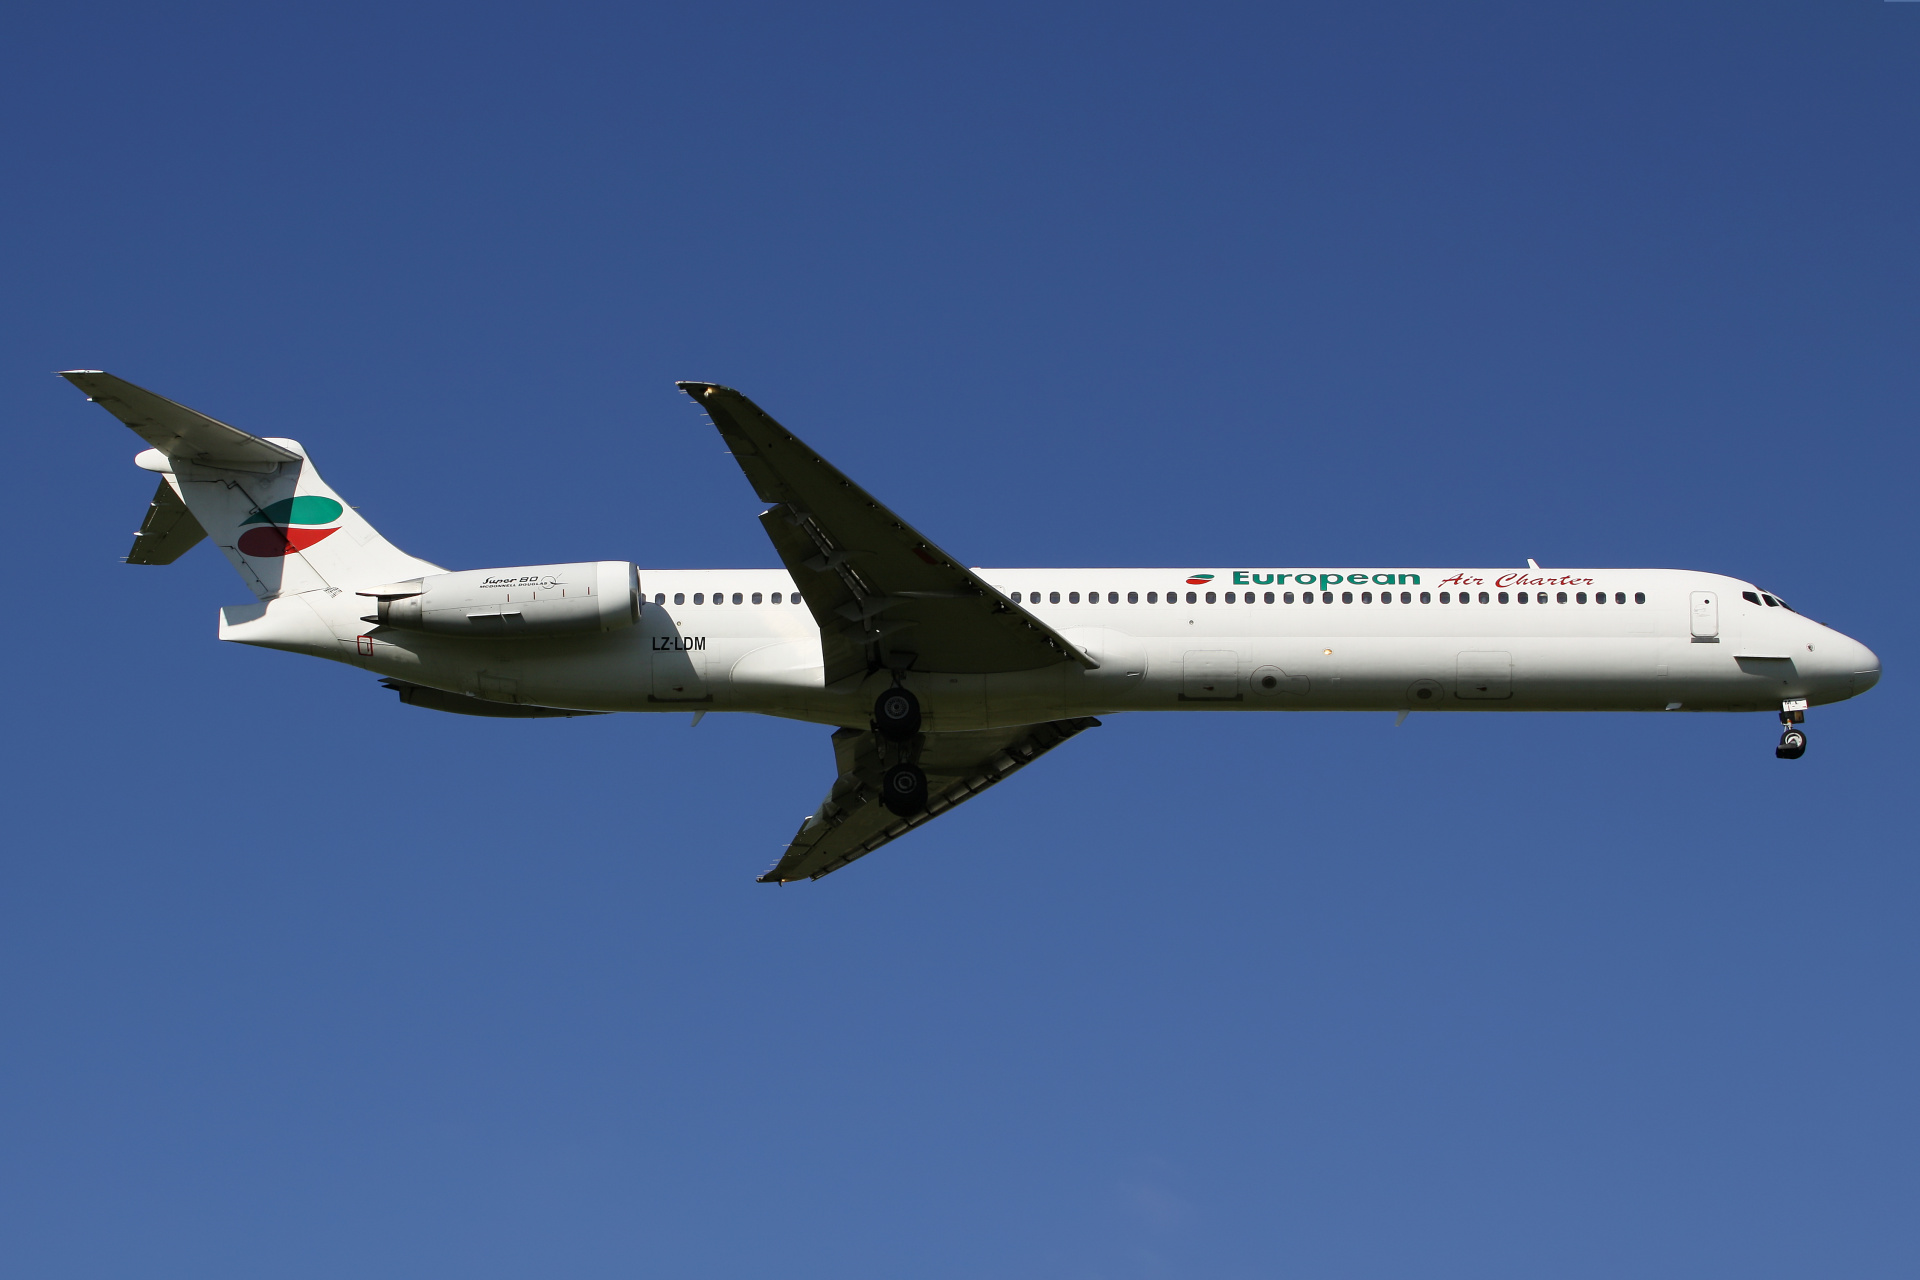 LZ-LDM, European Air Charter (Aircraft » EPWA Spotting » McDonnell Douglas MD-82)